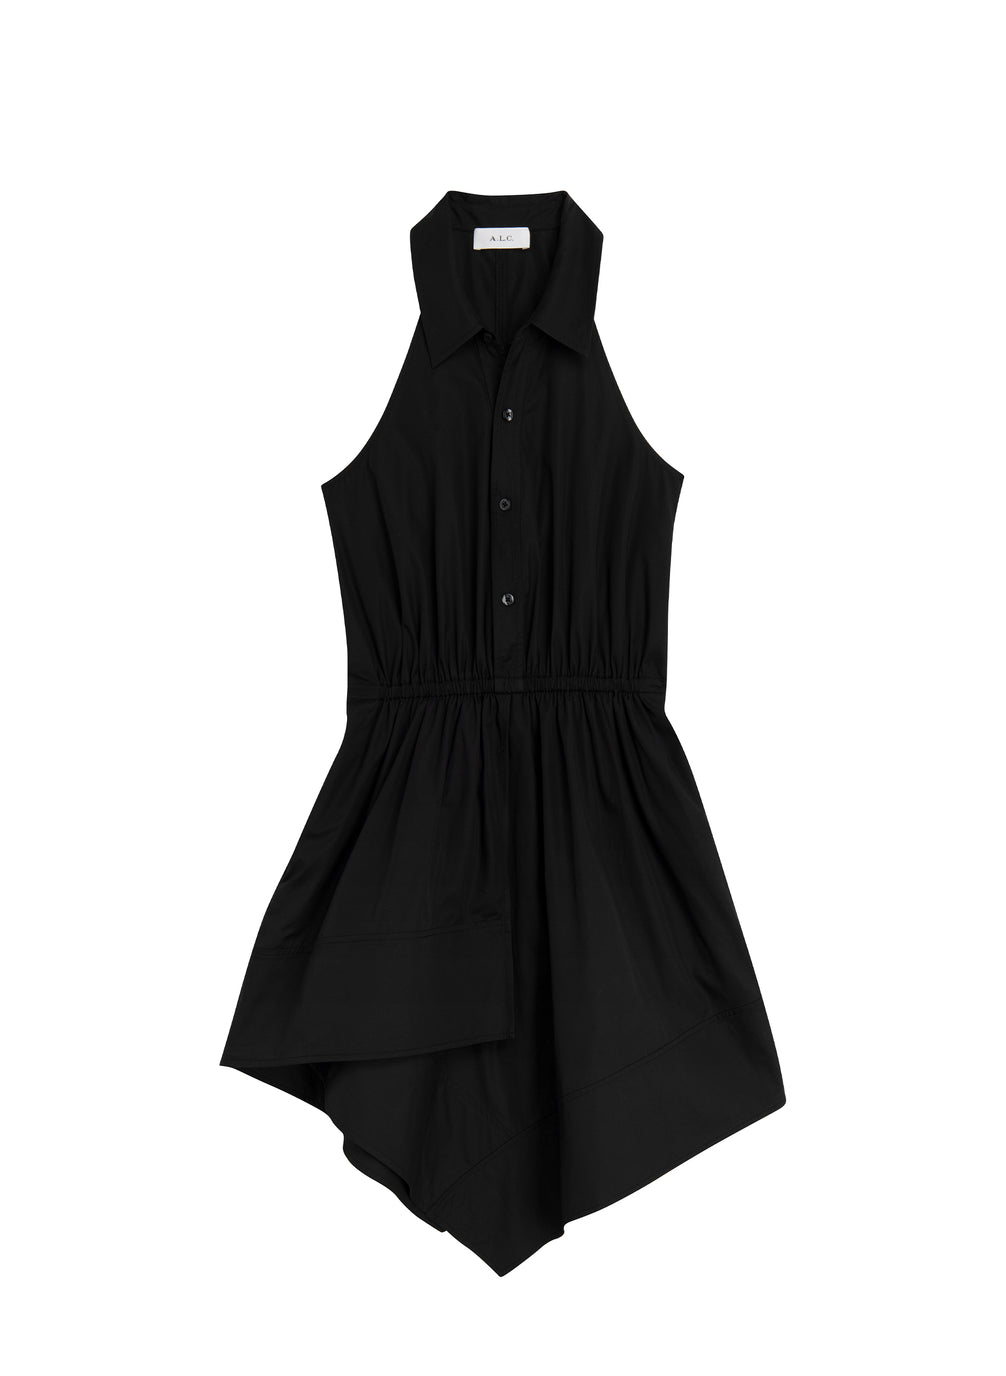 flatlay of black sleeveless collared mini dress